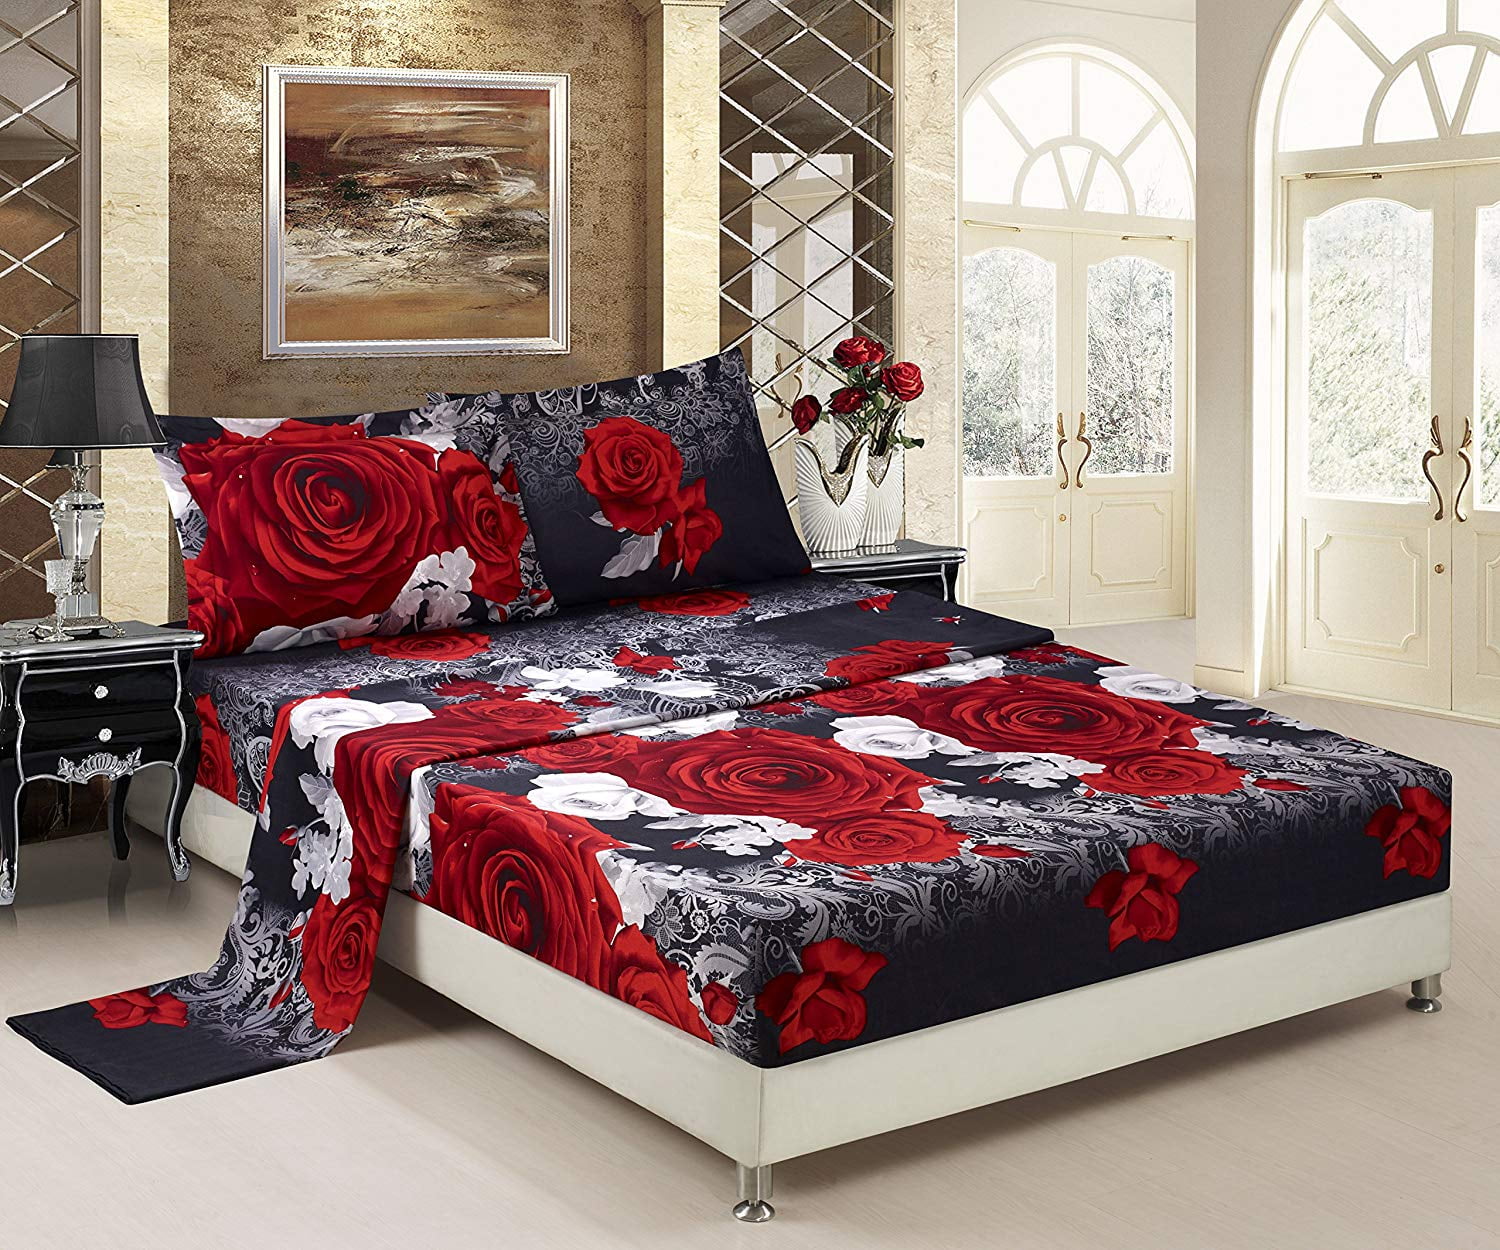 Egyptian 100% Cotton Comfort Bed Sheet Bedding Sheet Set Twin Queen King 